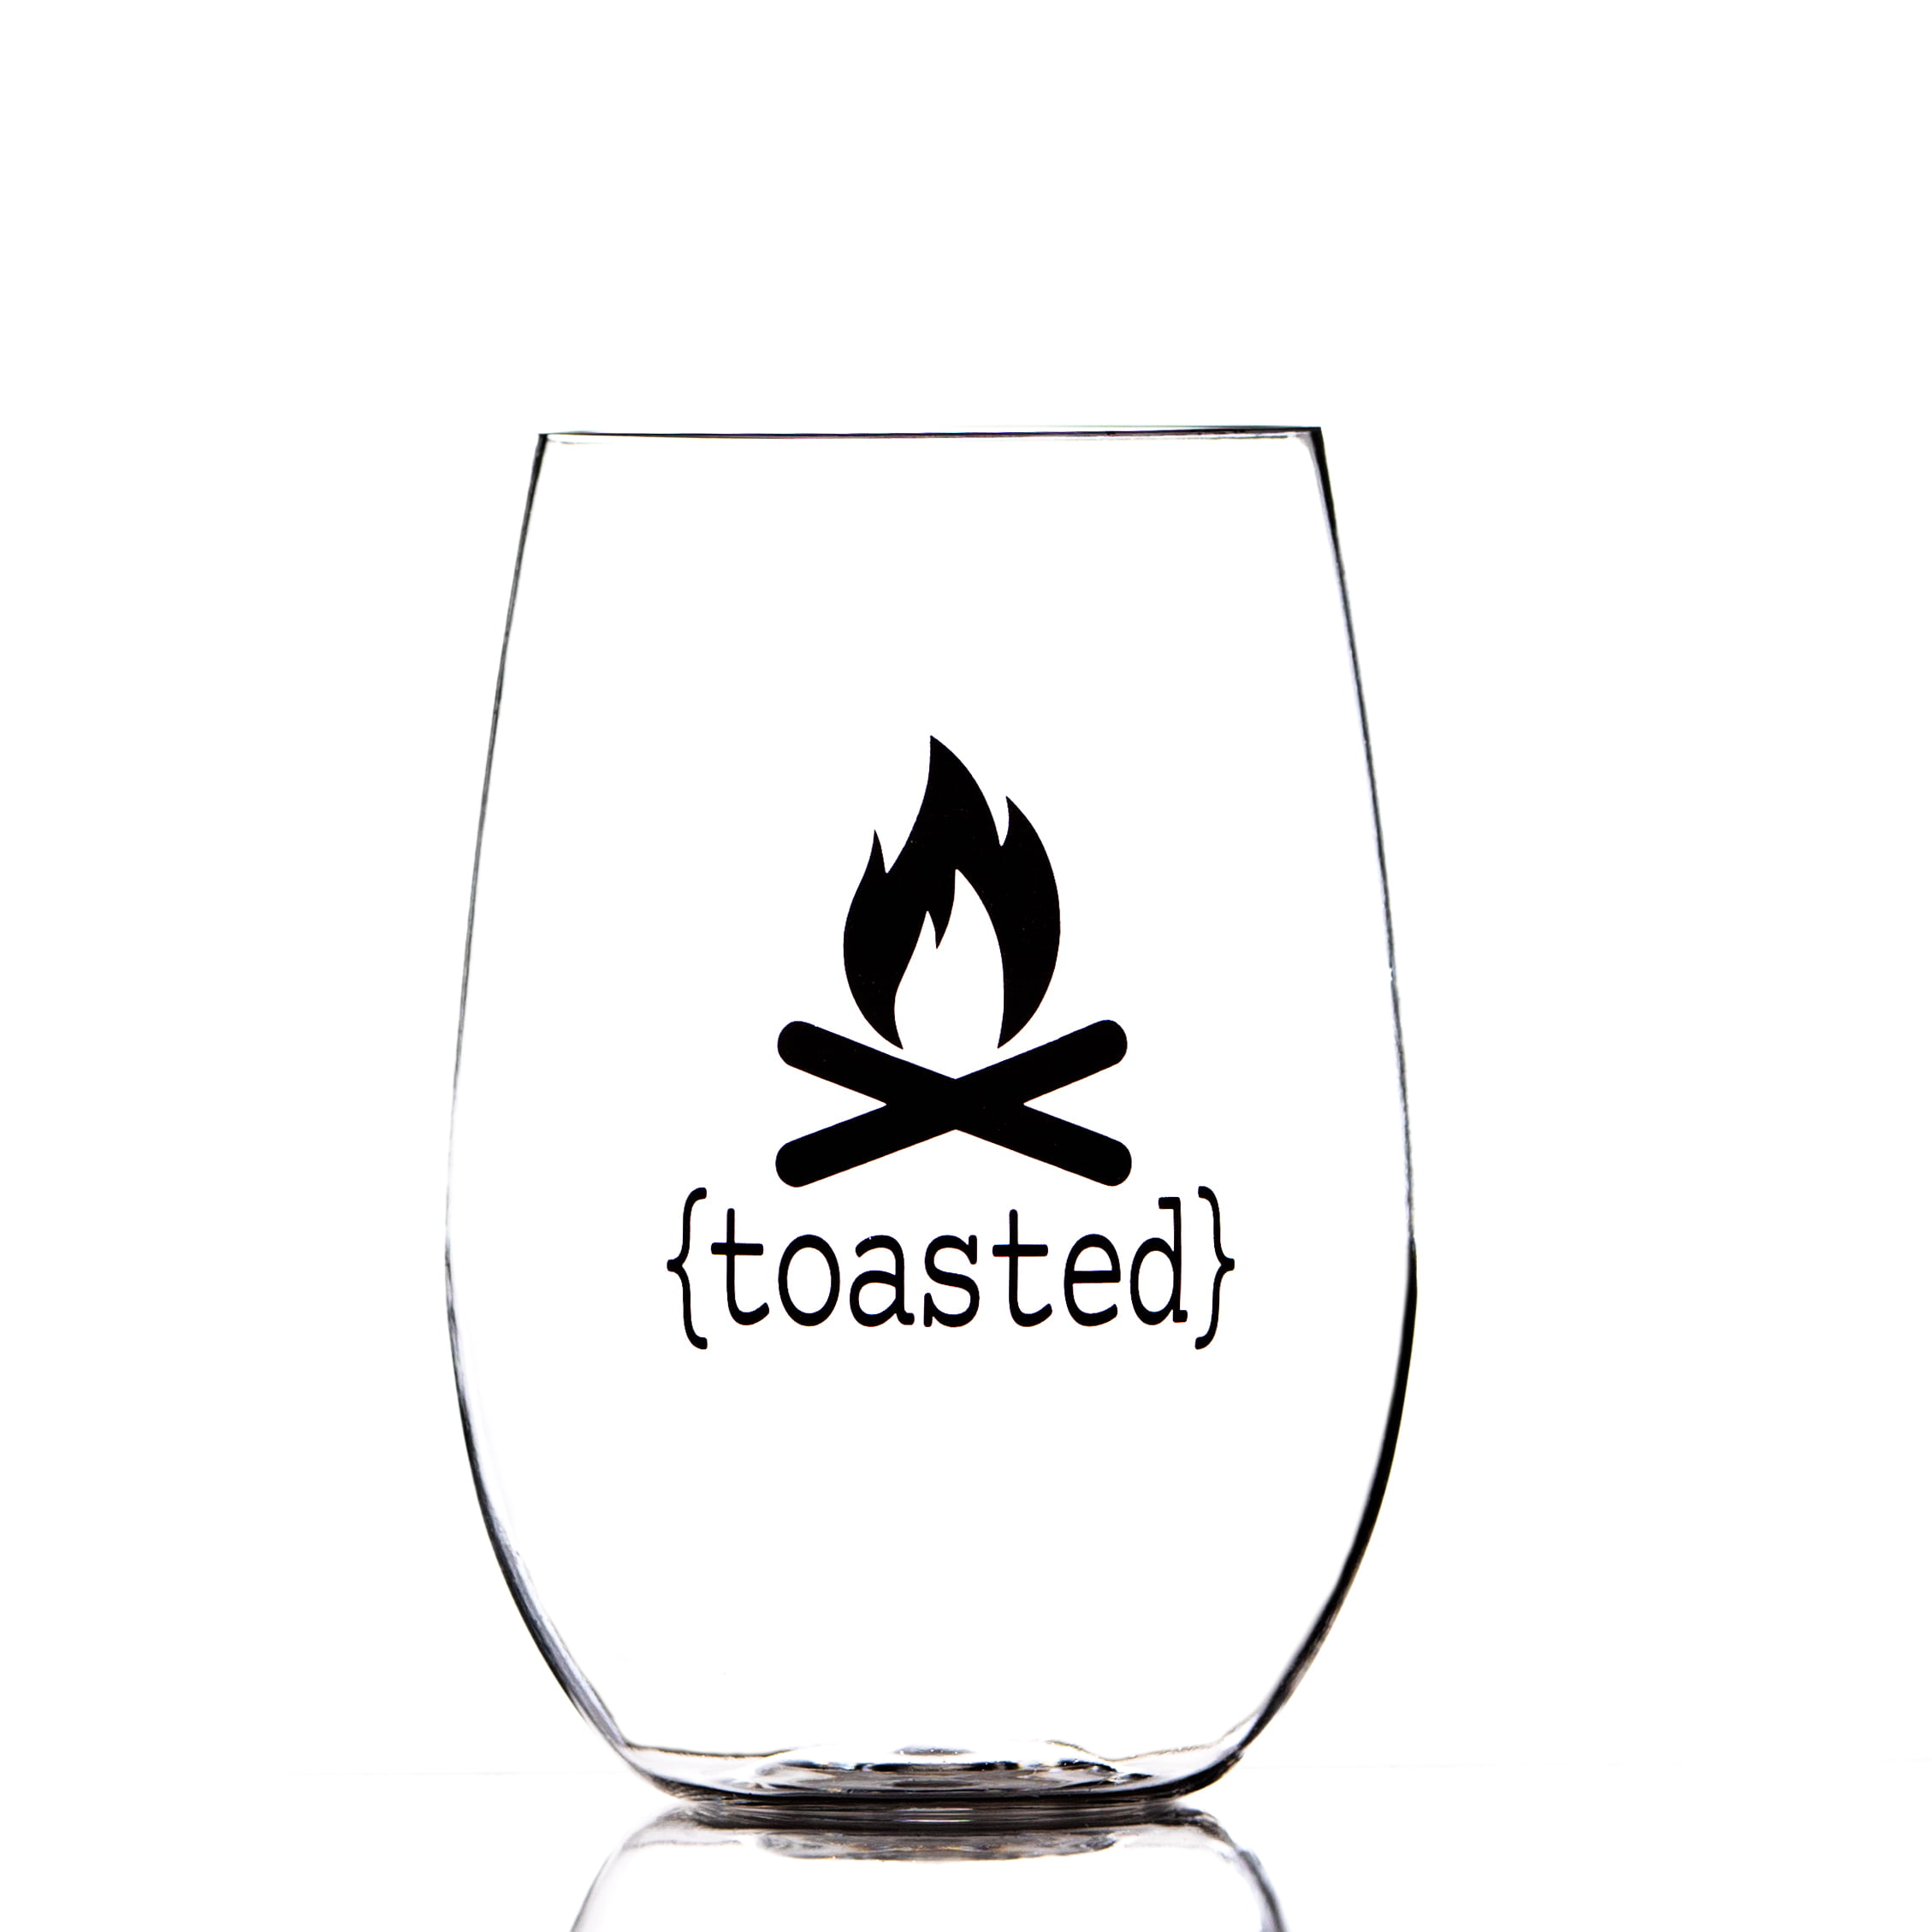 Glasses Set of 6 twisty Cups, Wine Glasses, Handblown Glass, Handmade Glass,  Colourful Fun Tumblers, Stemless Glasses, Dishwasher Safe 